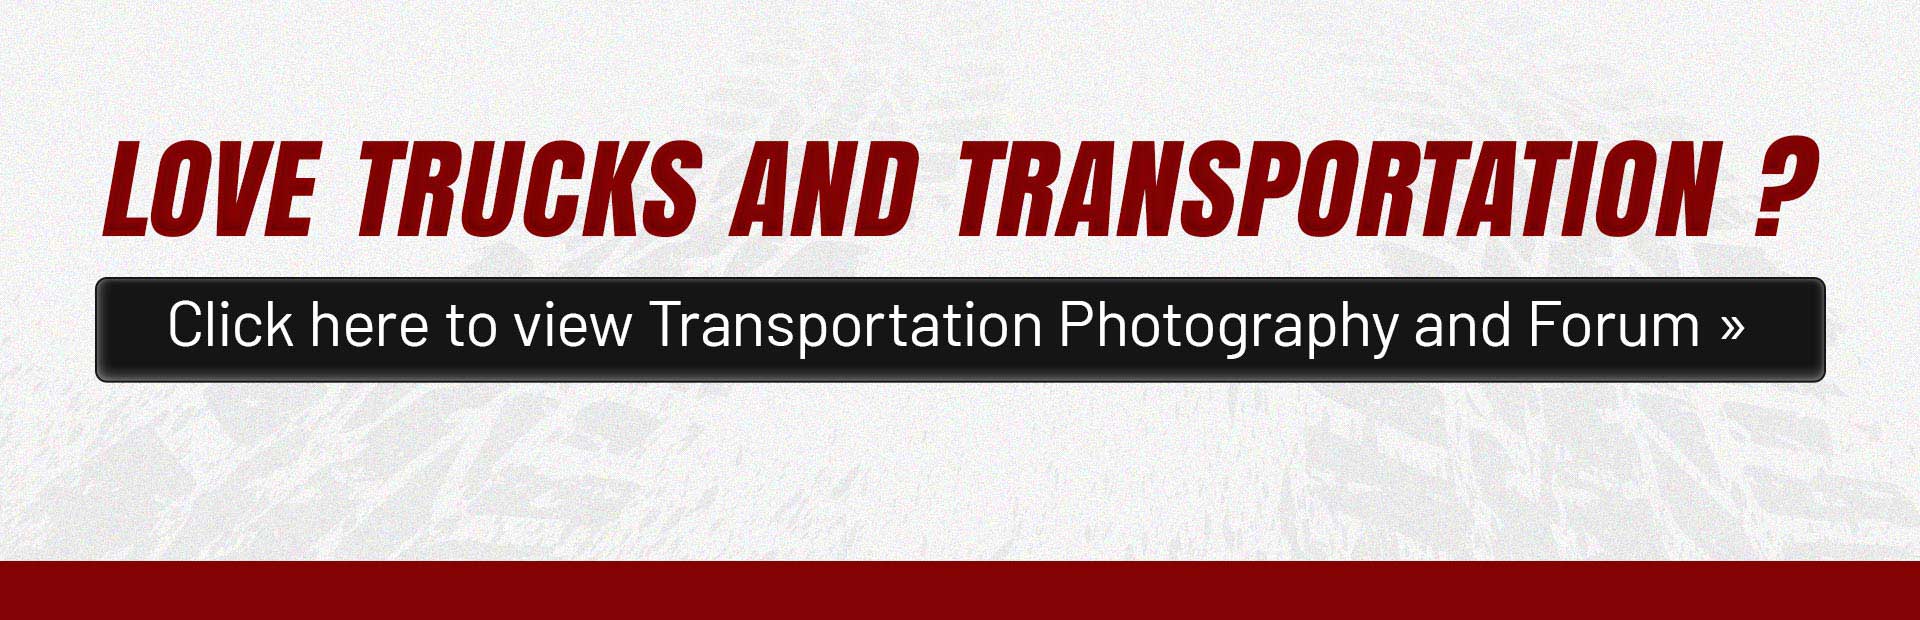 Trucks and Transportation